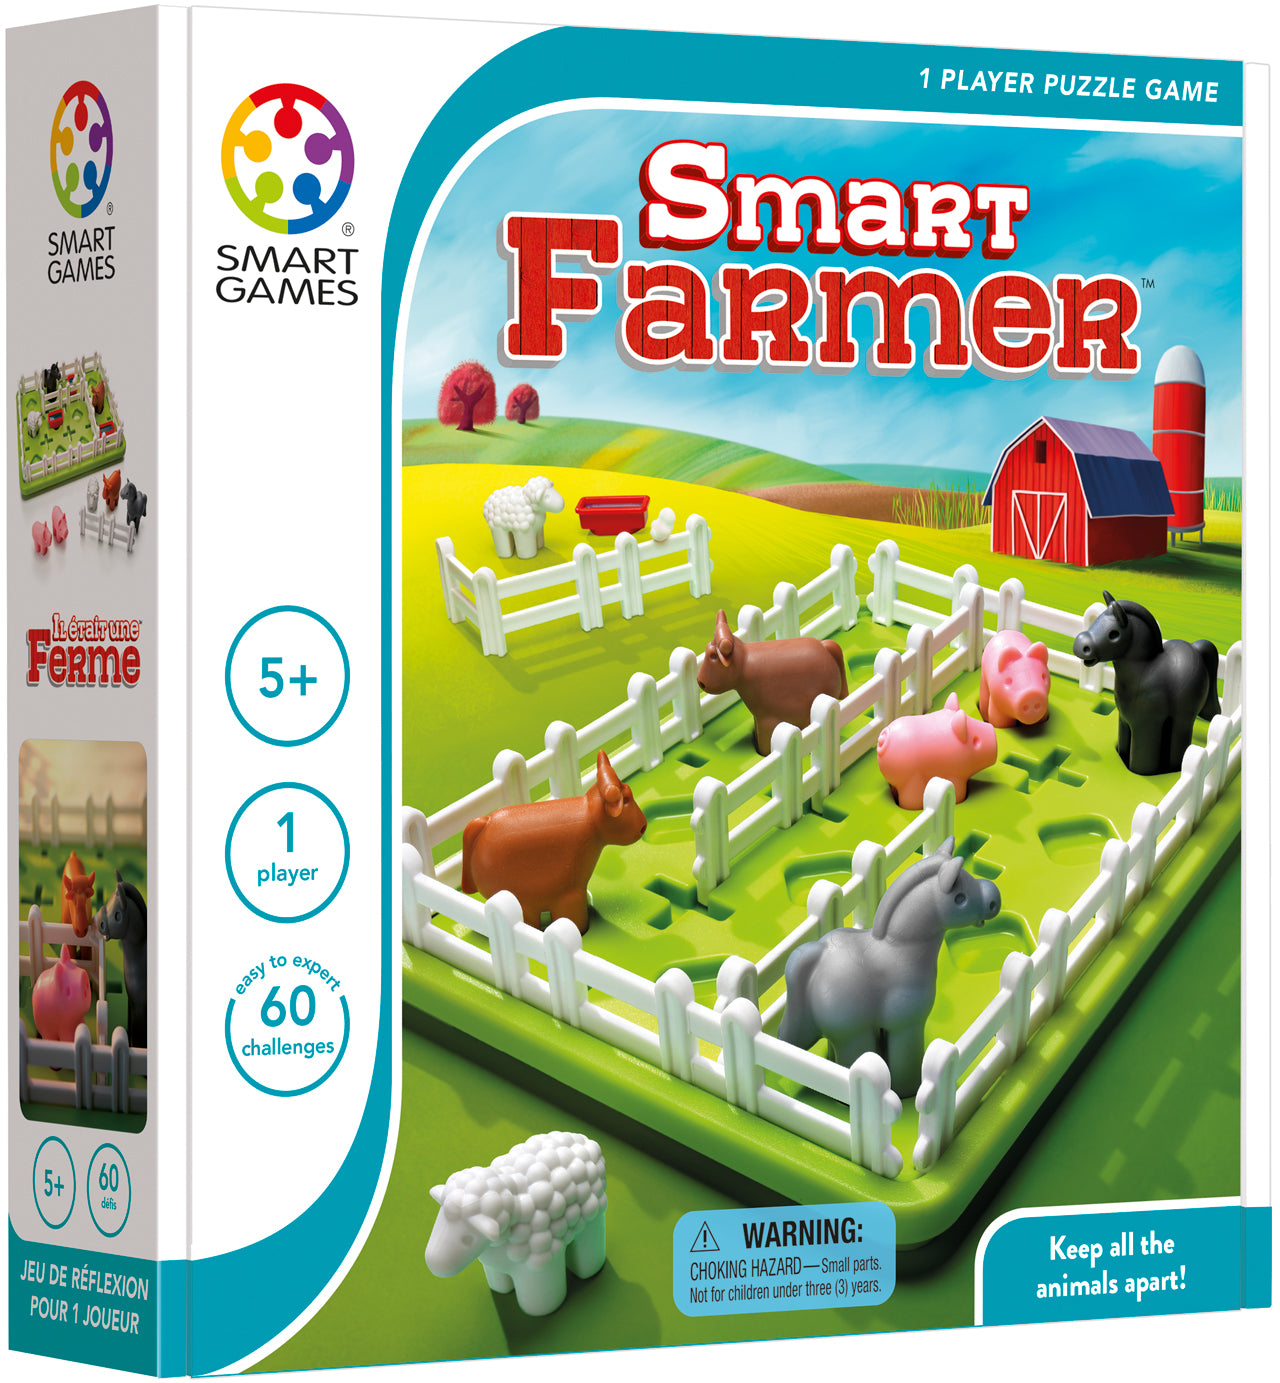 SMART GAMES Smart Farmer - Single Player